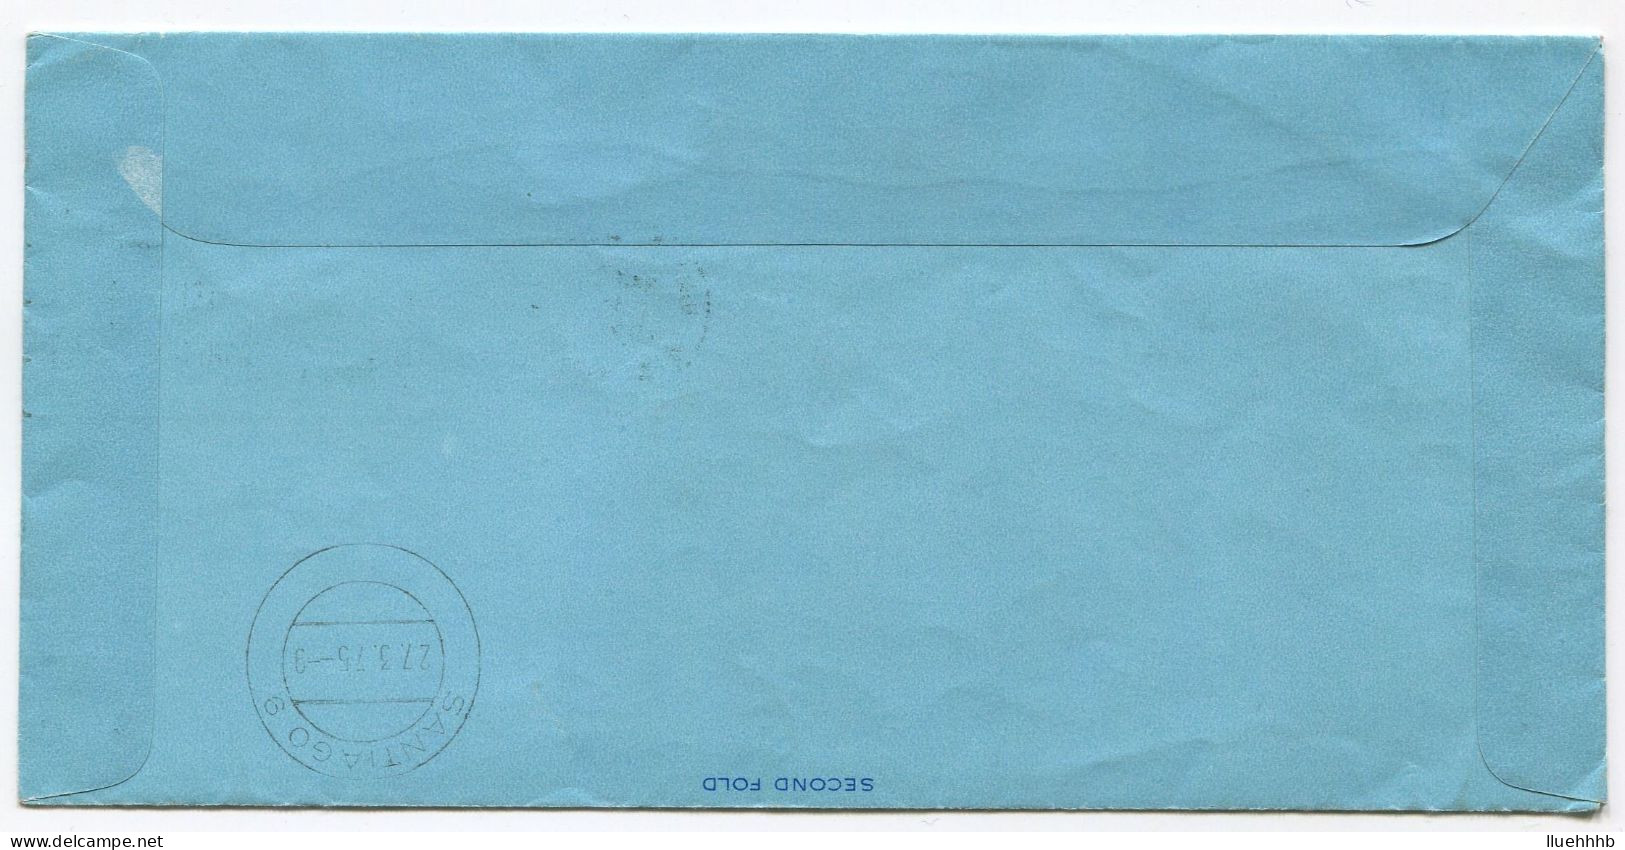 UNITED NATIONS: 1975 UC12 18c Aerogramme Sent To CHILE - Posta Aerea